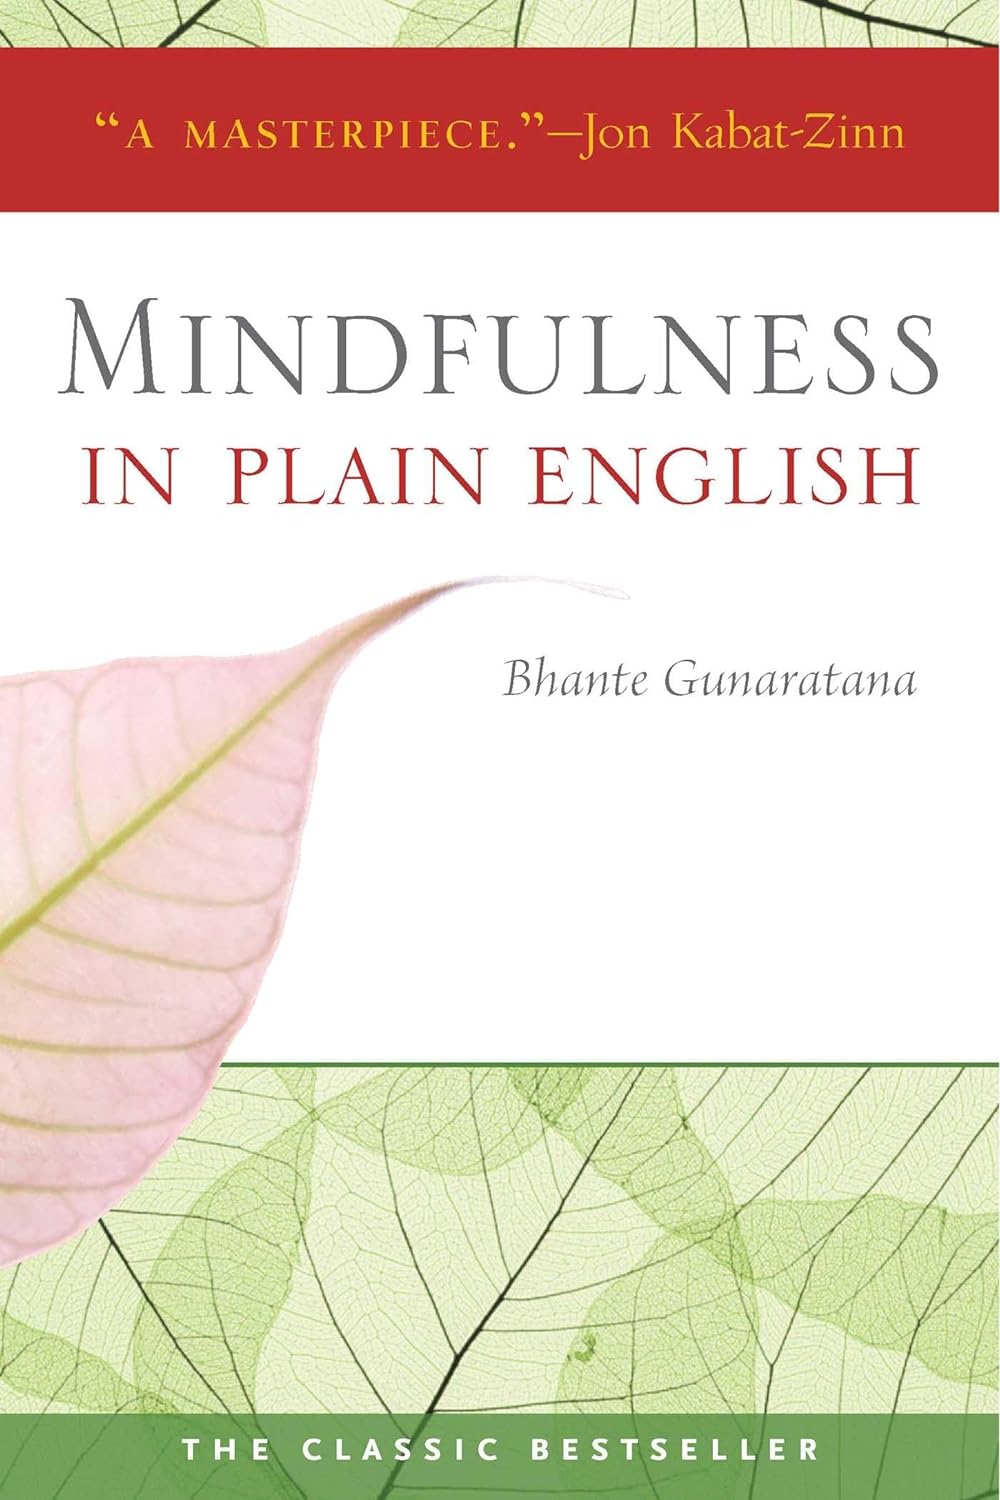 Mindfulness in Plain English (1996)